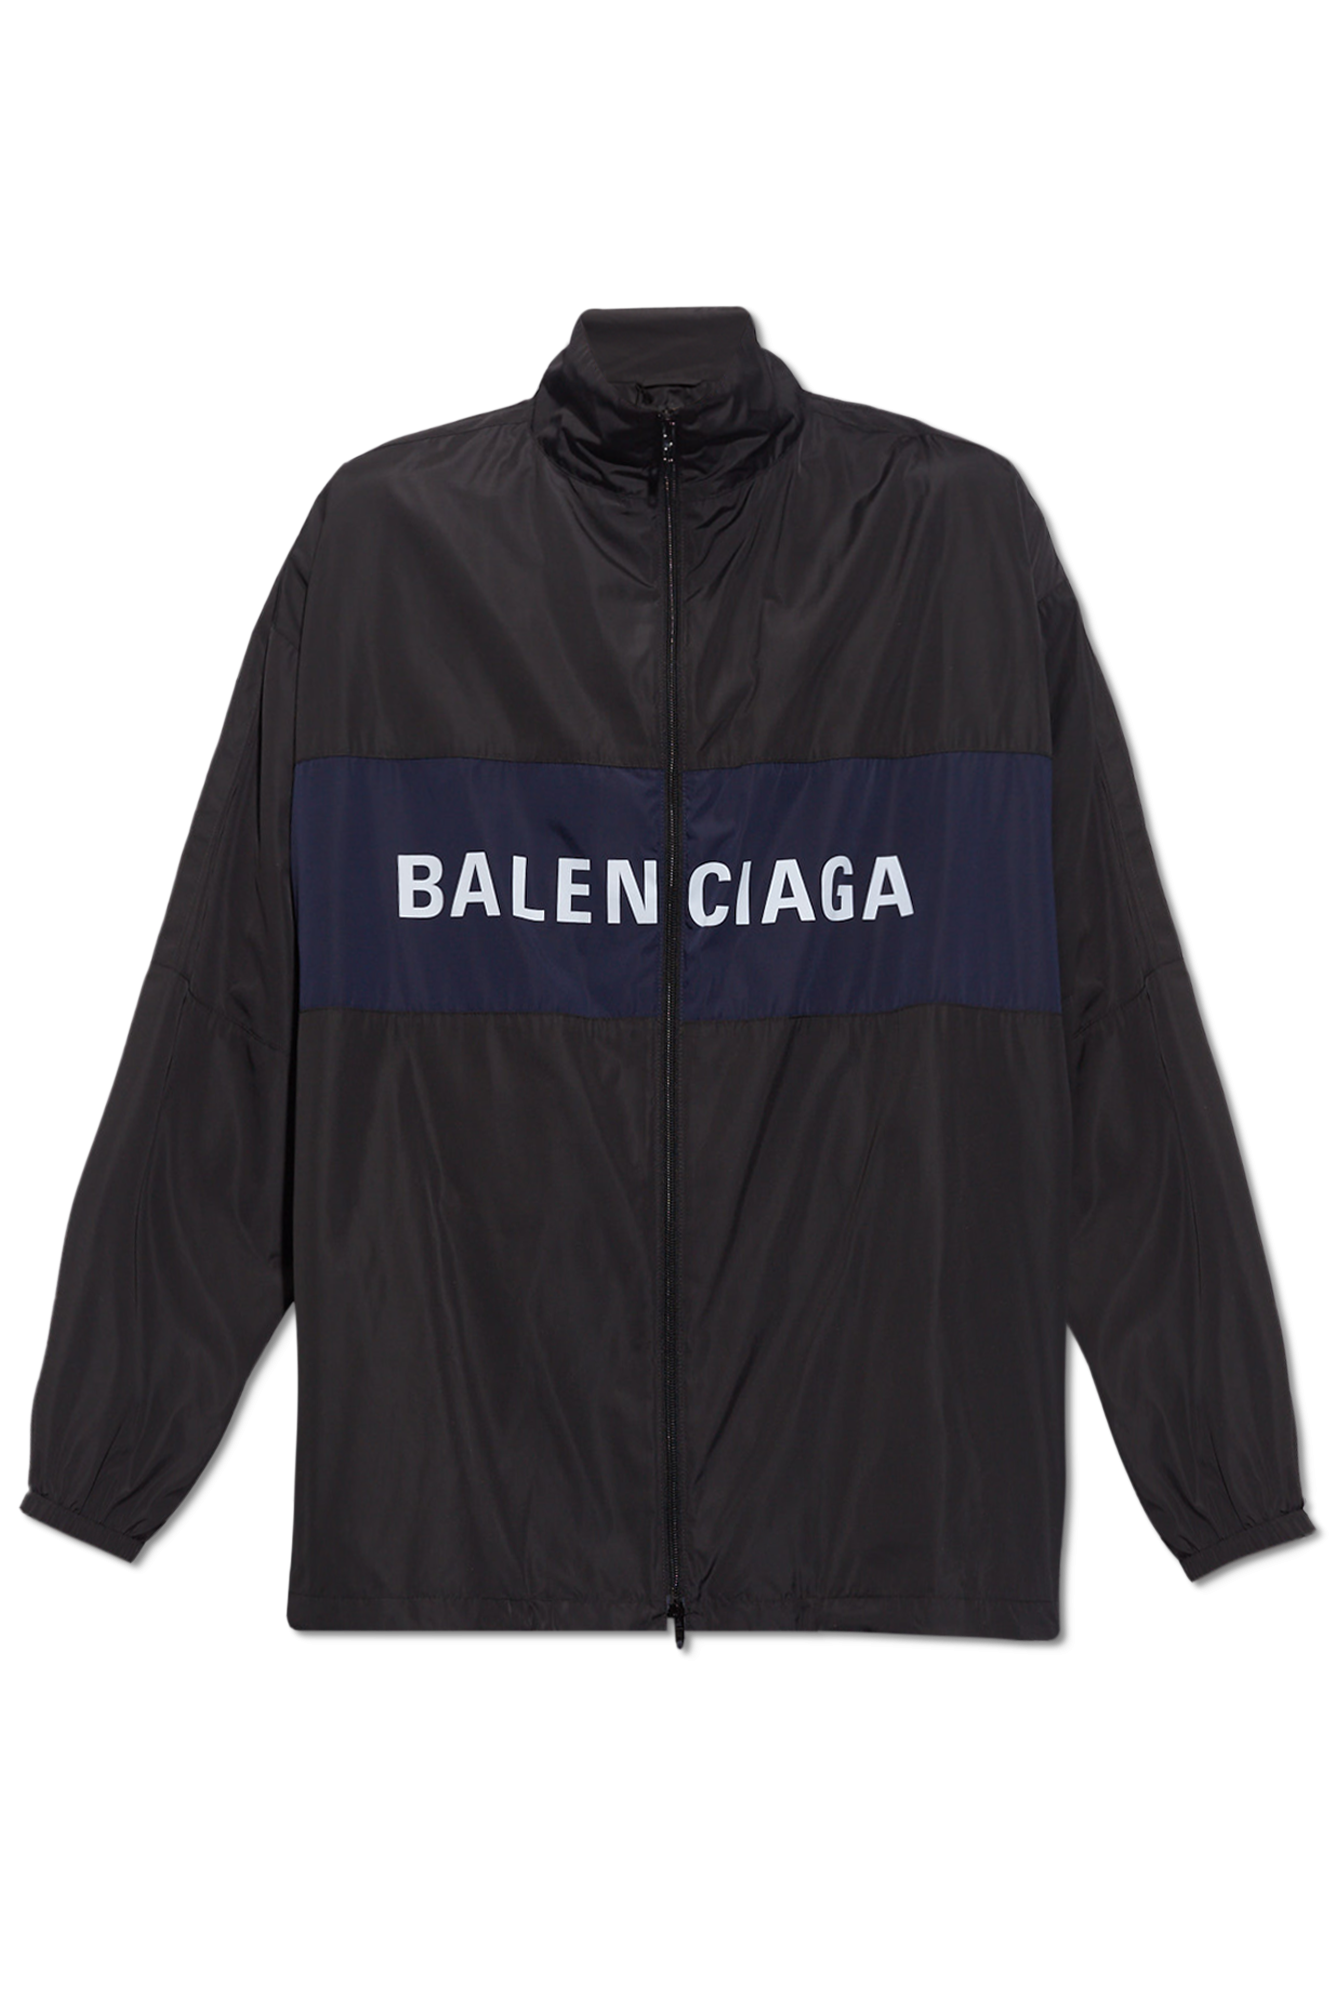 Balenciaga Kenneth Cole Hylan Slim Fit Pindot Suit Jacket